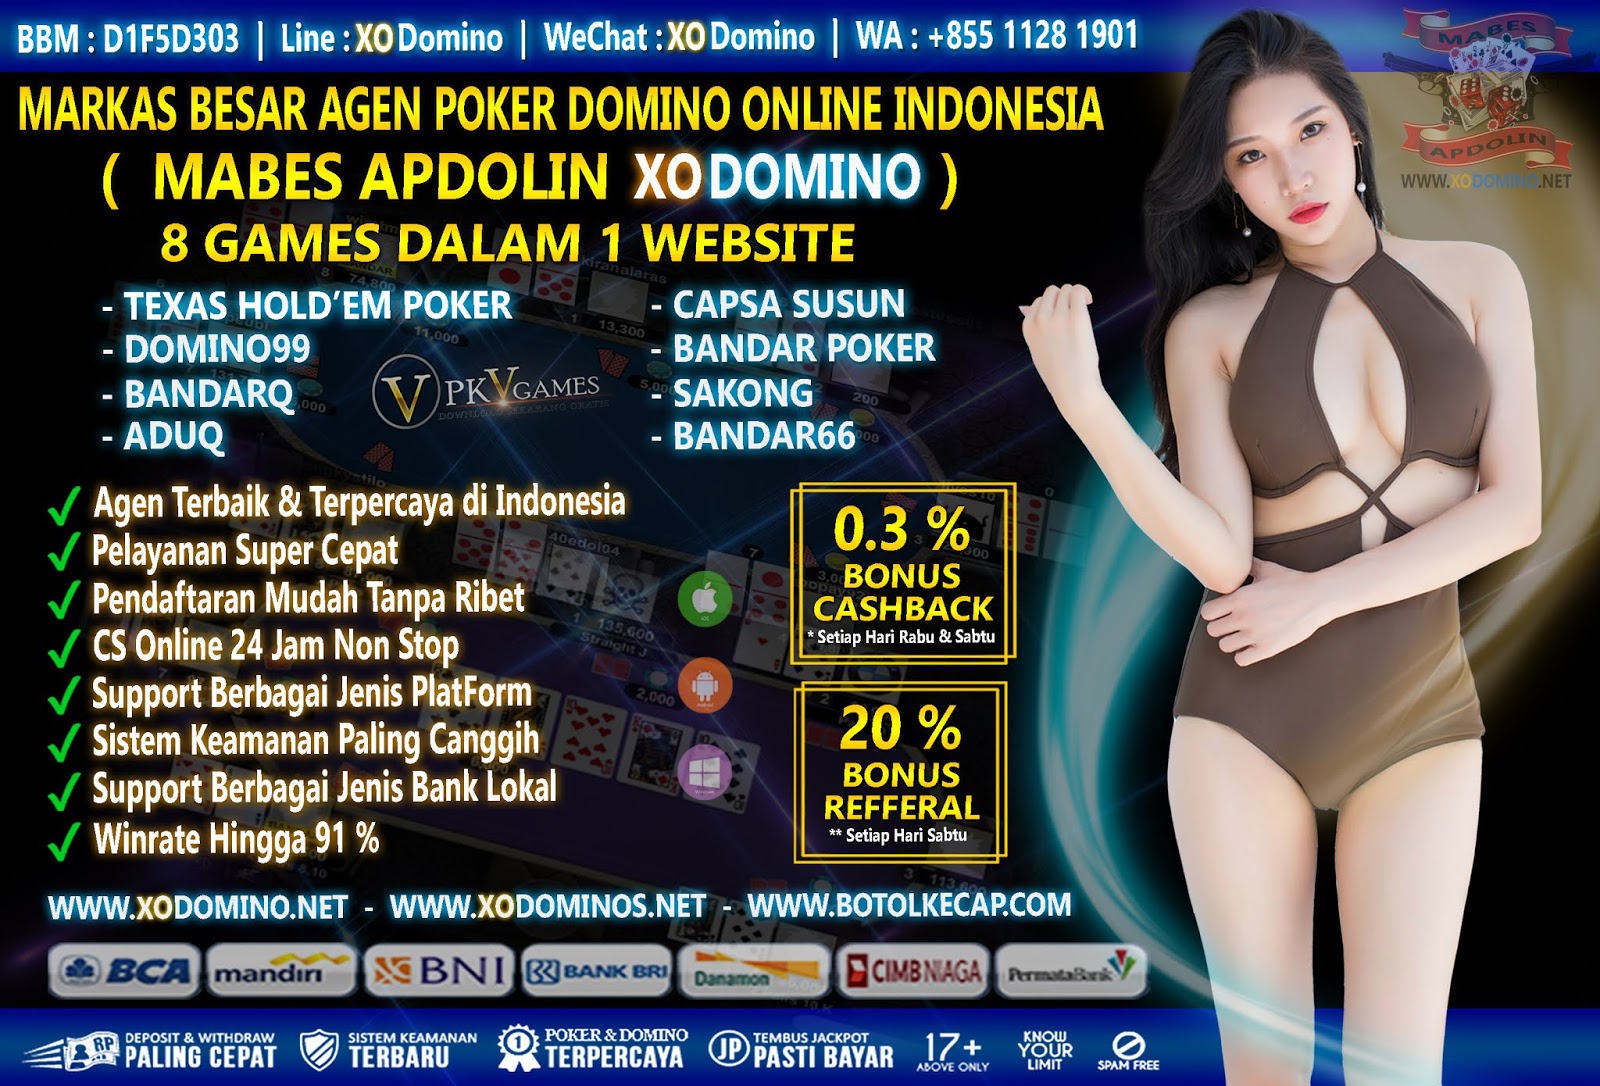 MABES APDOLIN XODOMINO, Agen Poker Domino Online Terbaik & Terpercaya di Indonesia